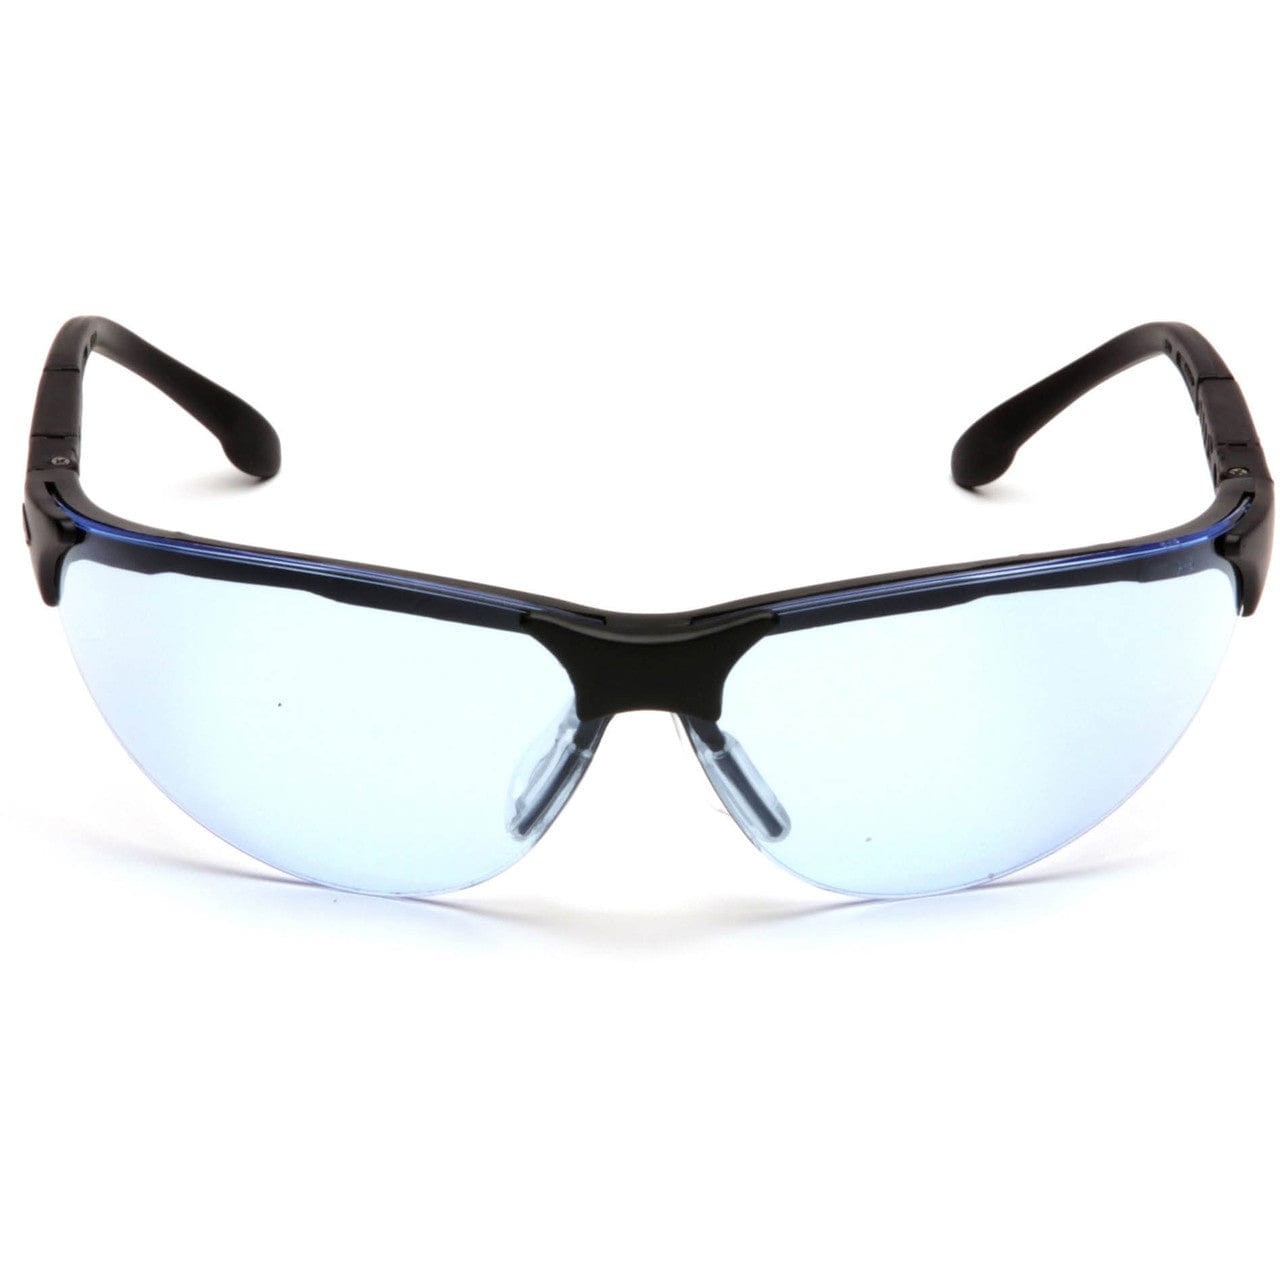 Pyramex Rendezvous Safety Glasses Black Frame Infinity Blue Lens SB2860S Front